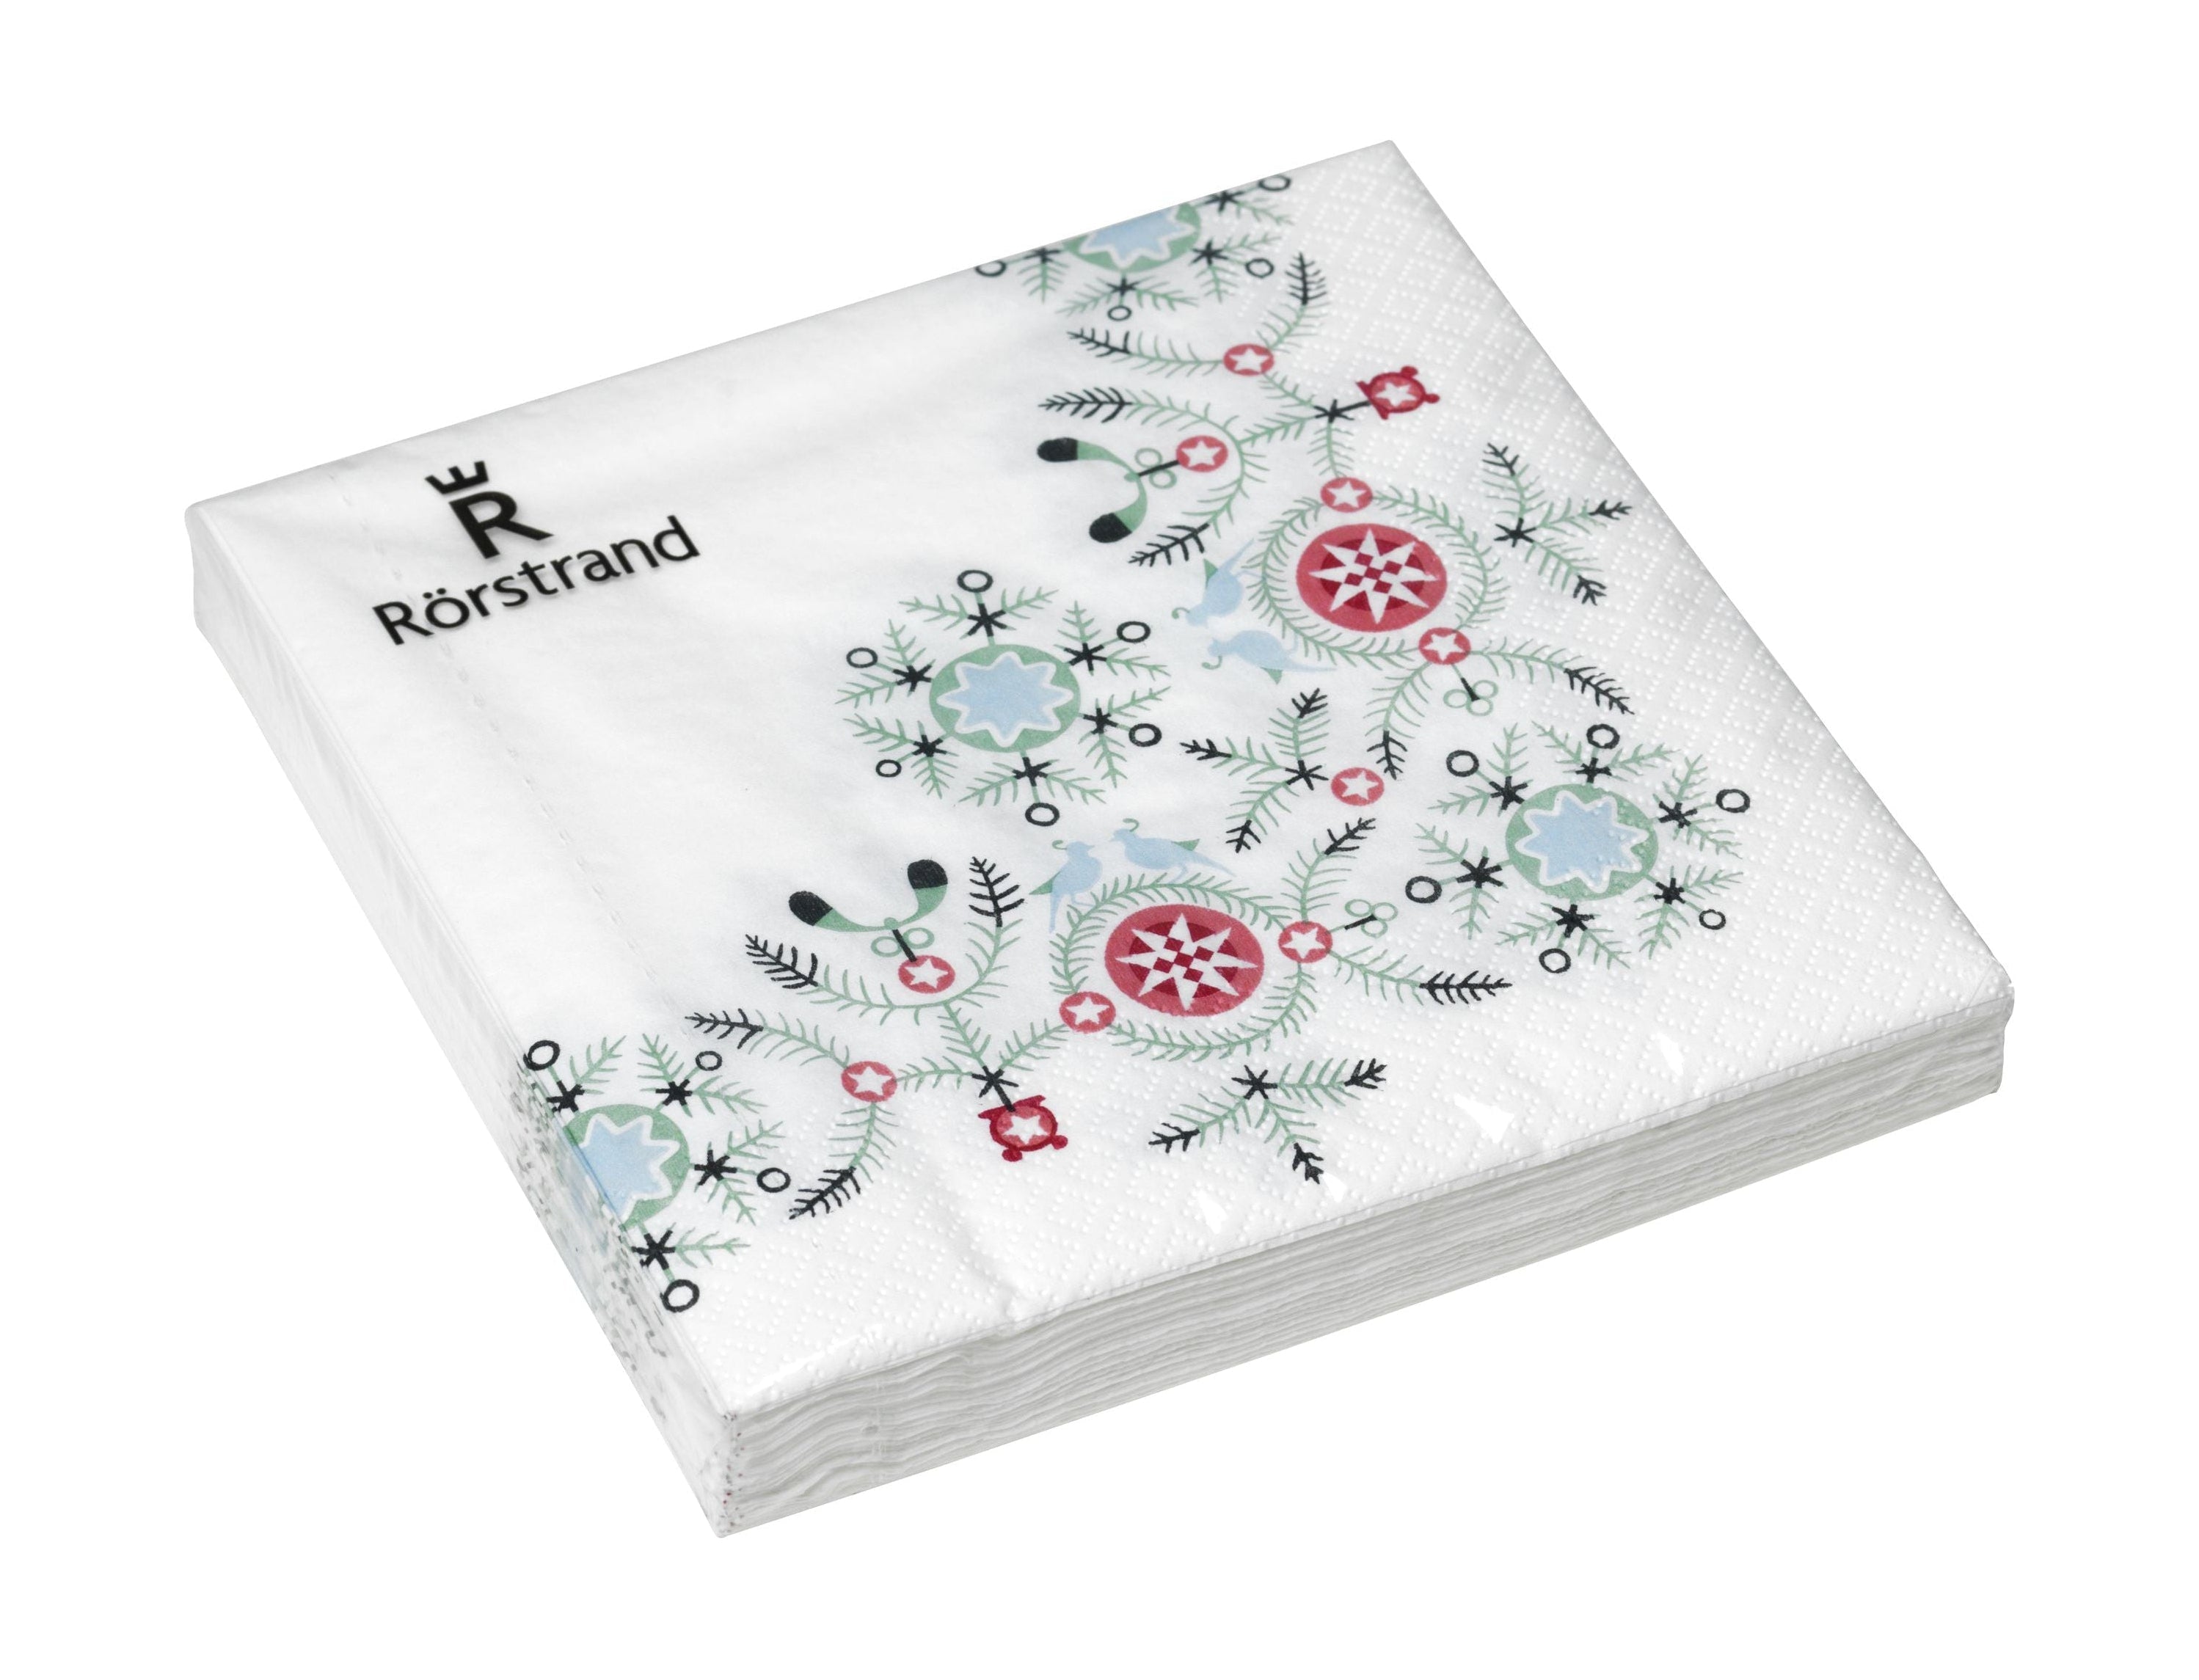 Rörstrand瑞典恩典冬季餐巾33 x33 cm 20 PC。